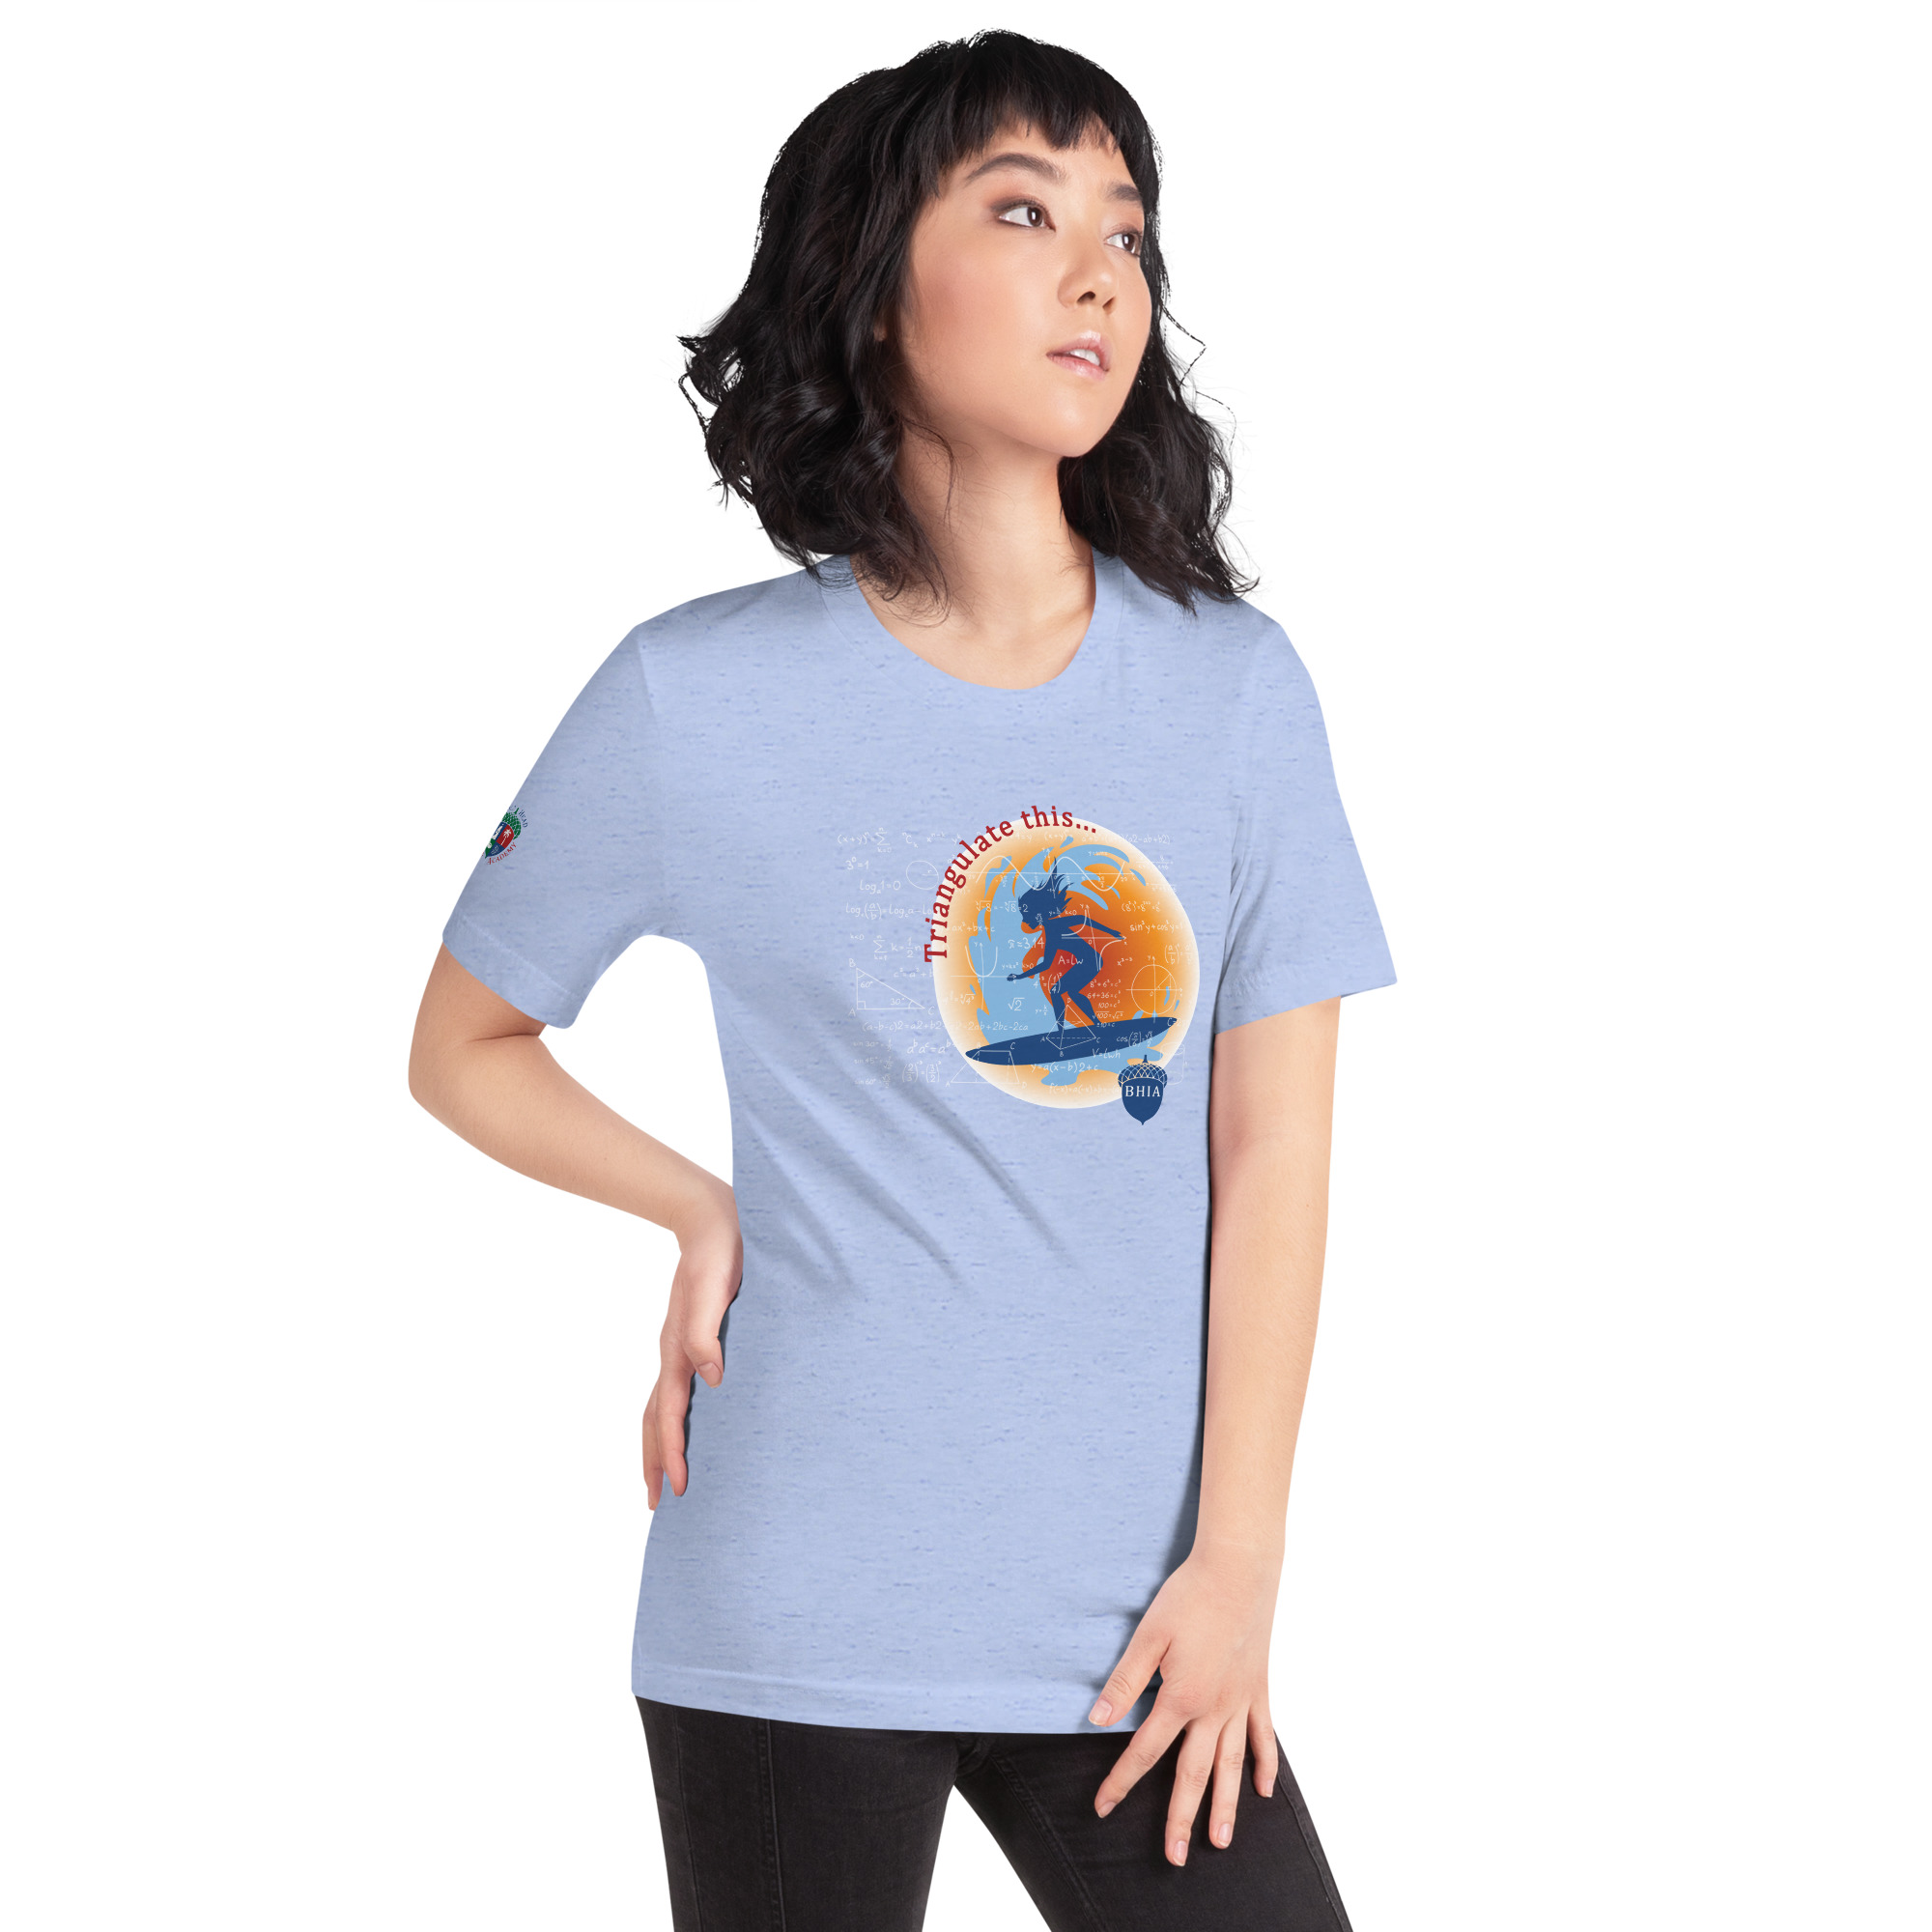 BHIA Unisex t-shirt – Triangulate This – Blue | Bald Head Island Academy